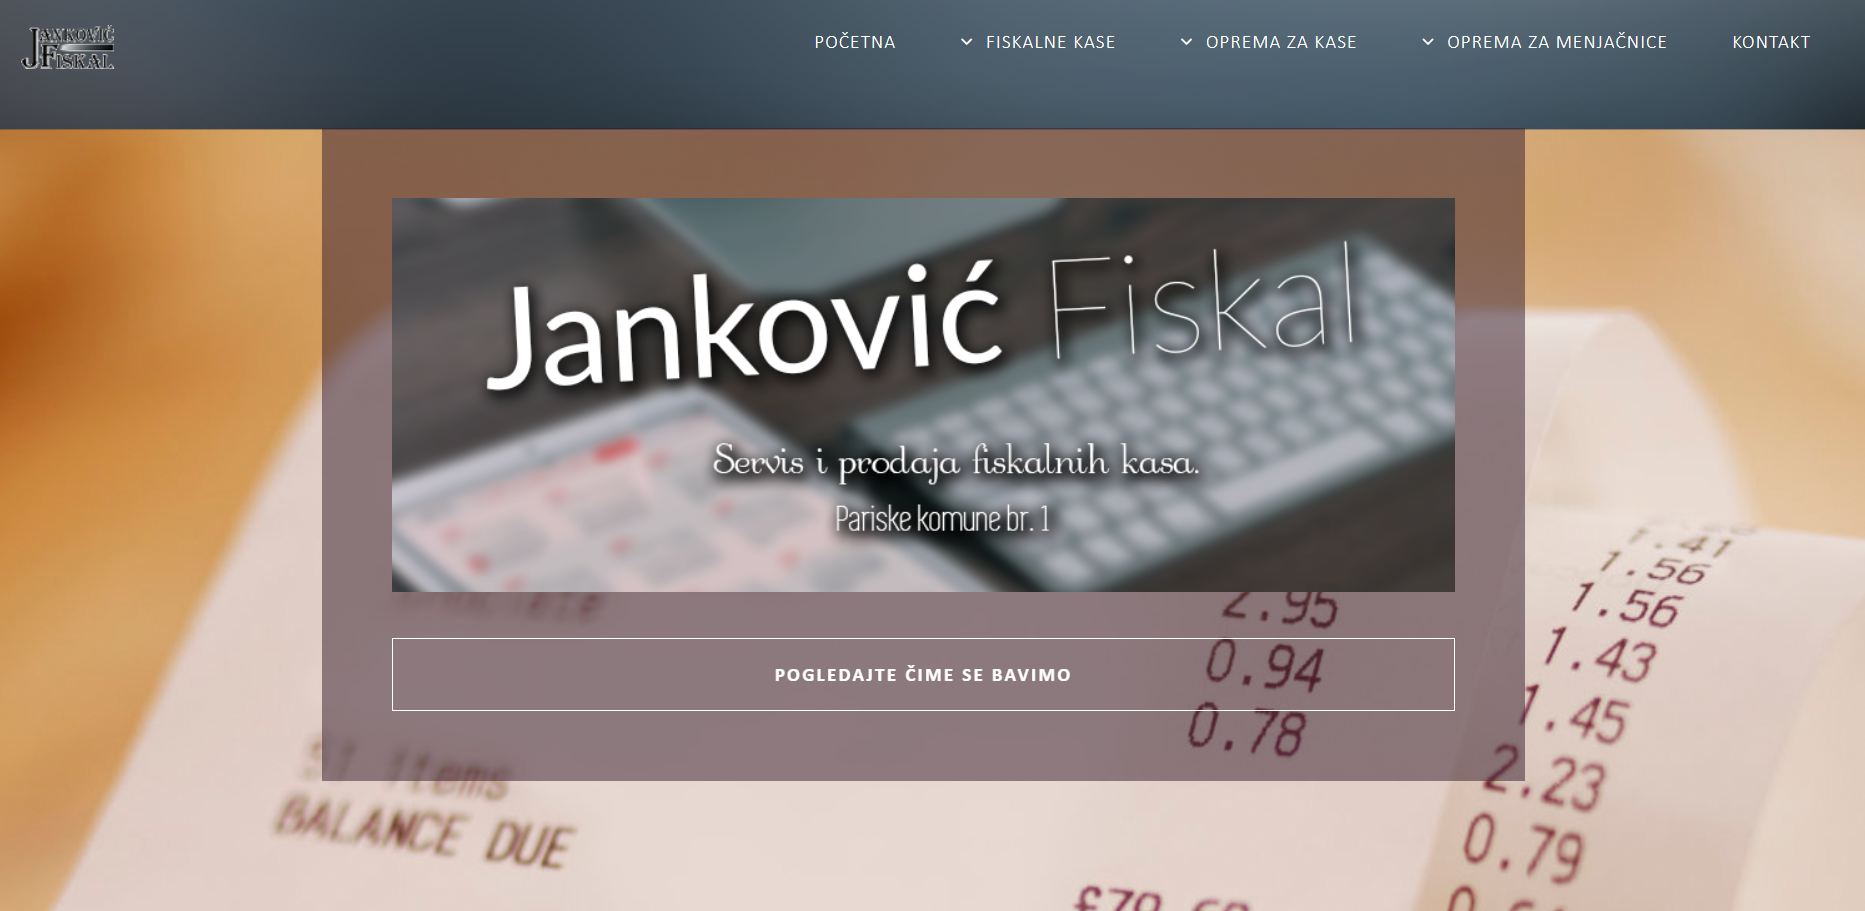 Janković fiskal